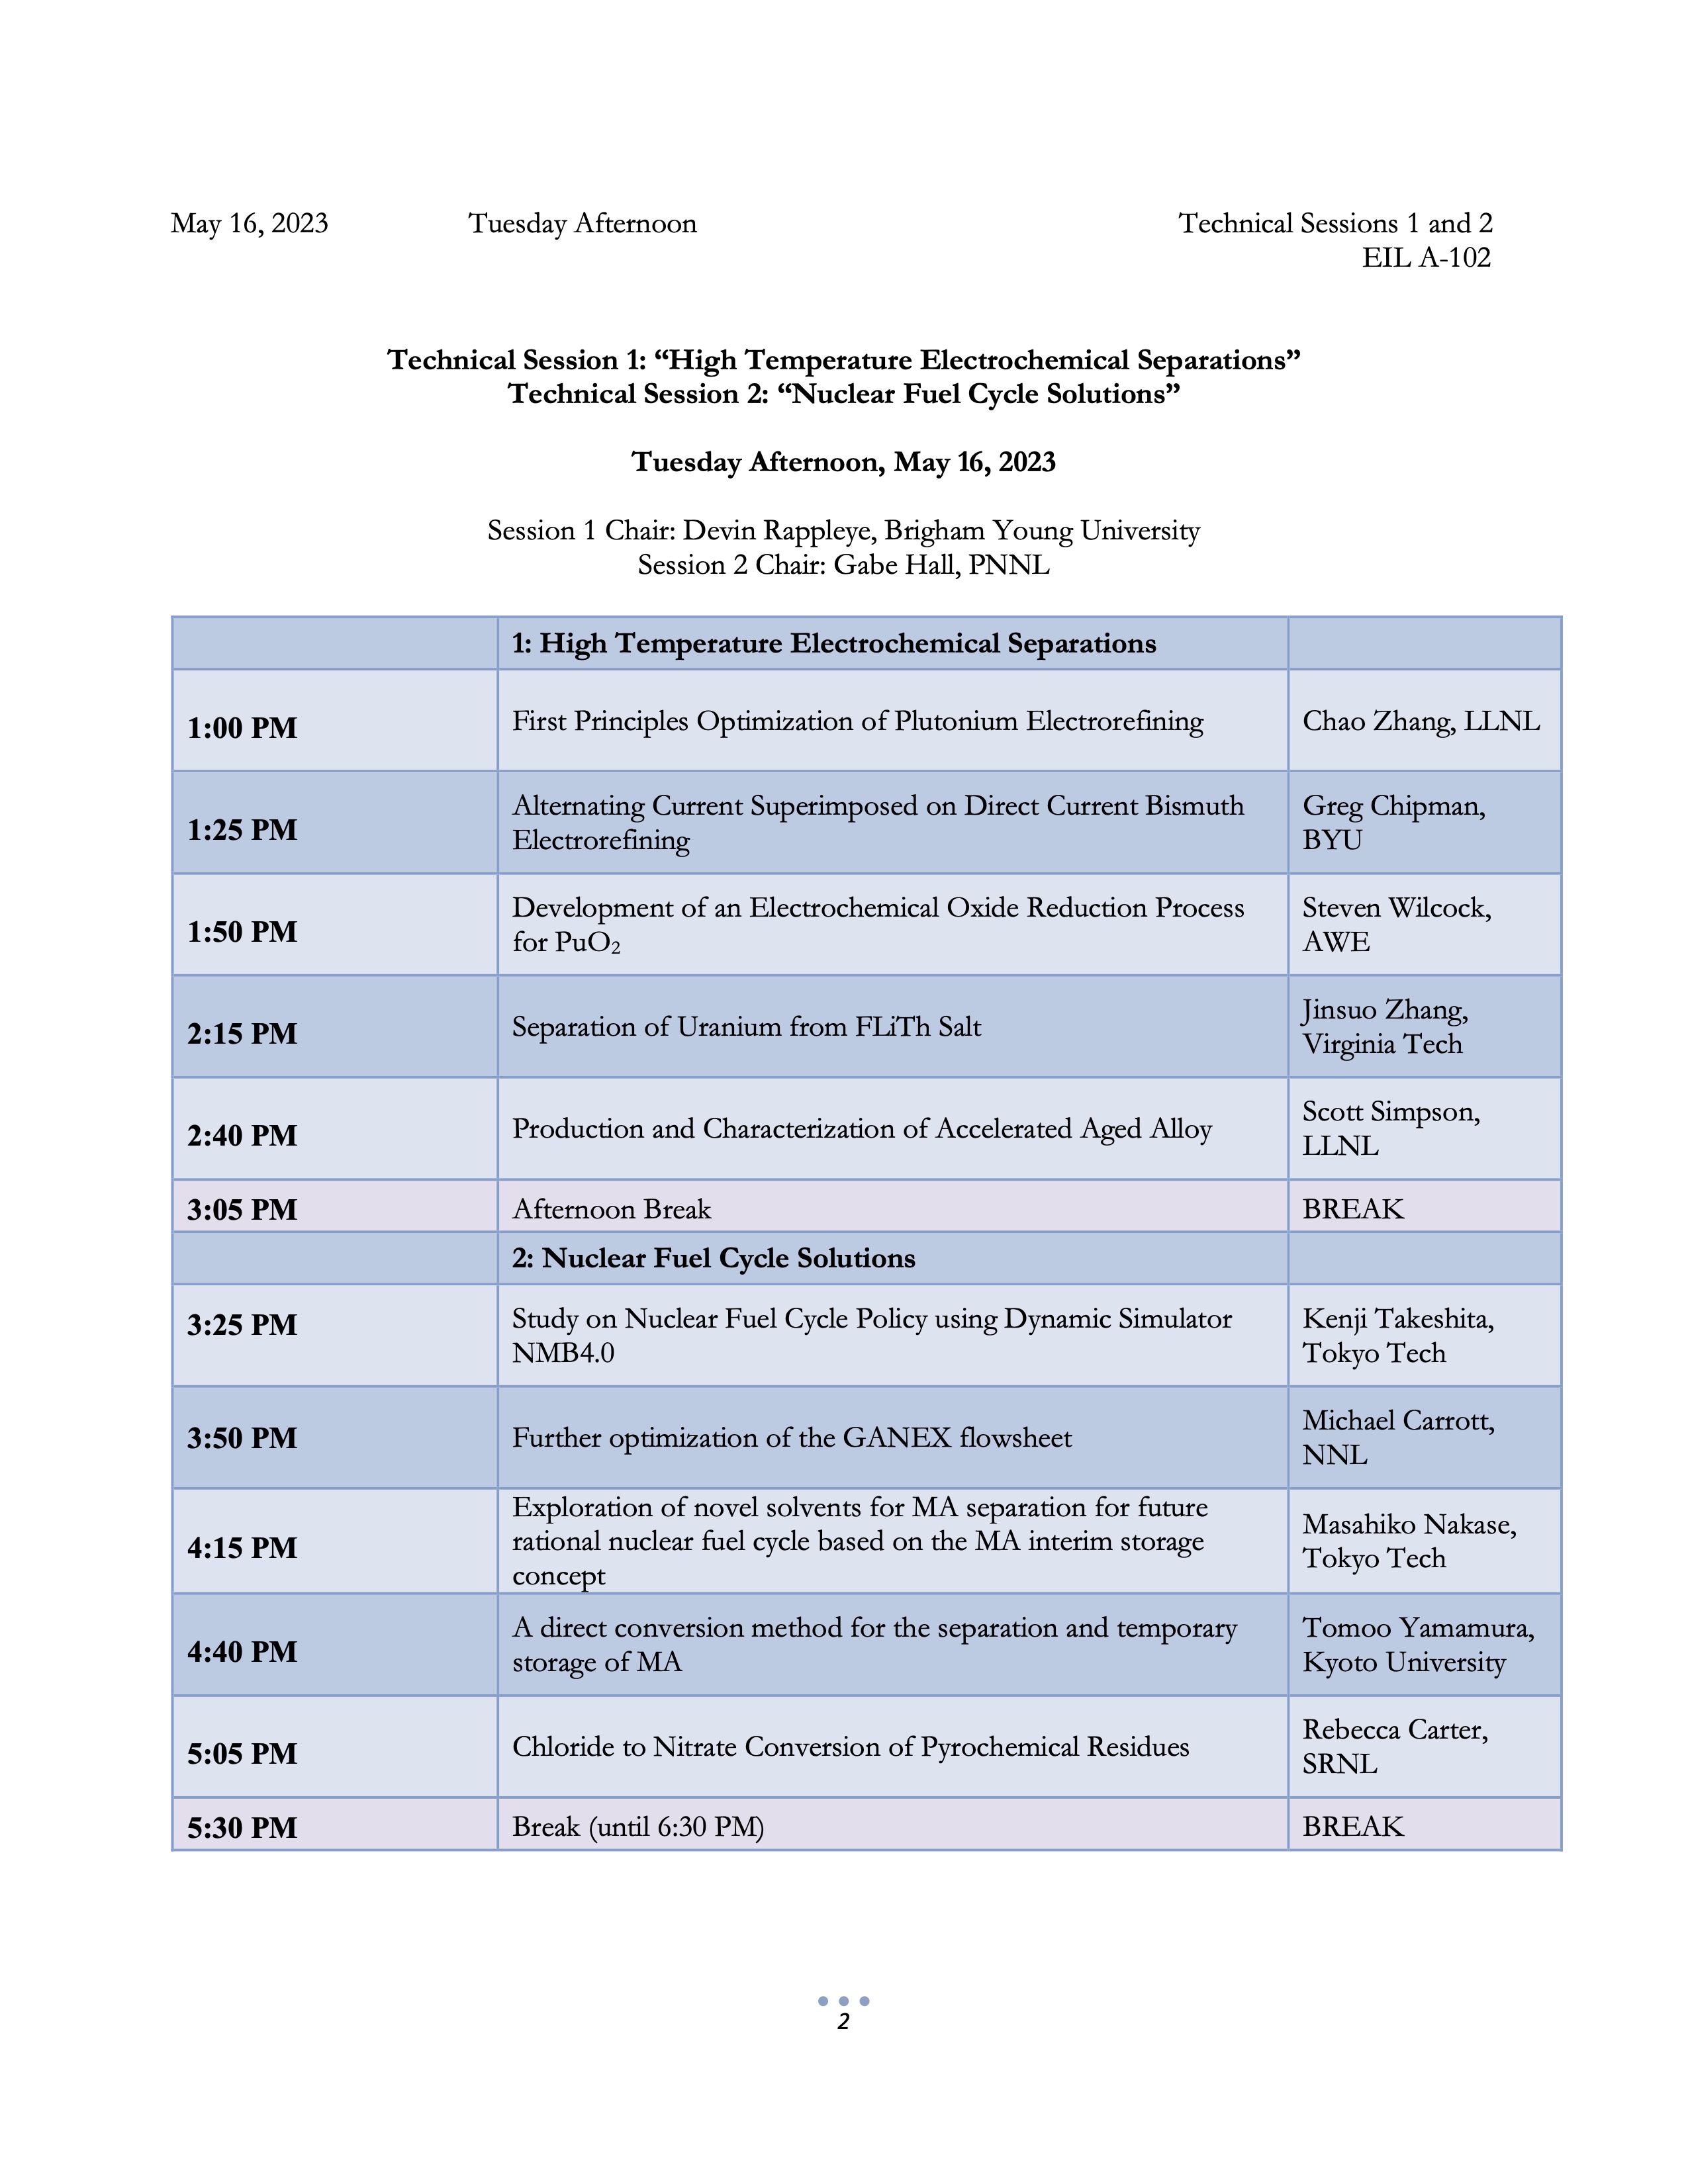 ASC 2023 Conference agenda